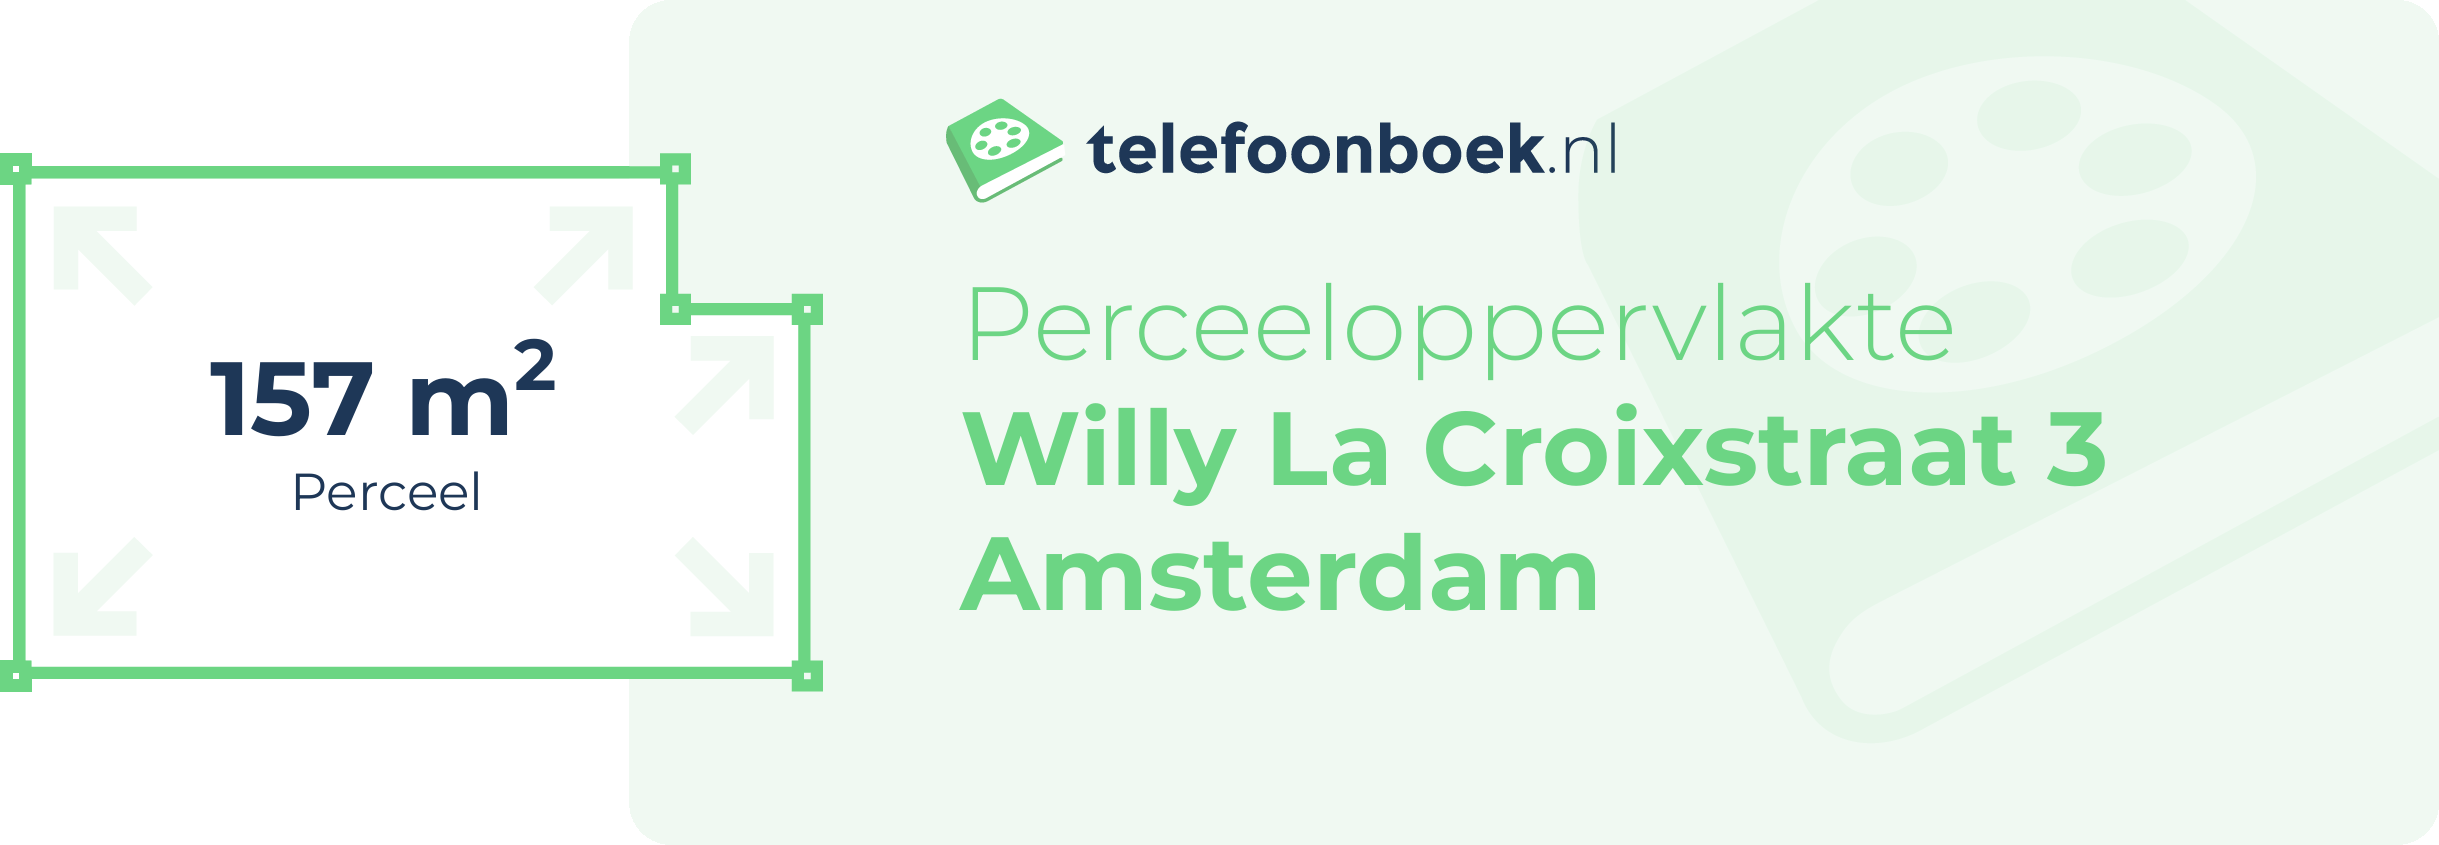 Perceeloppervlakte Willy La Croixstraat 3 Amsterdam